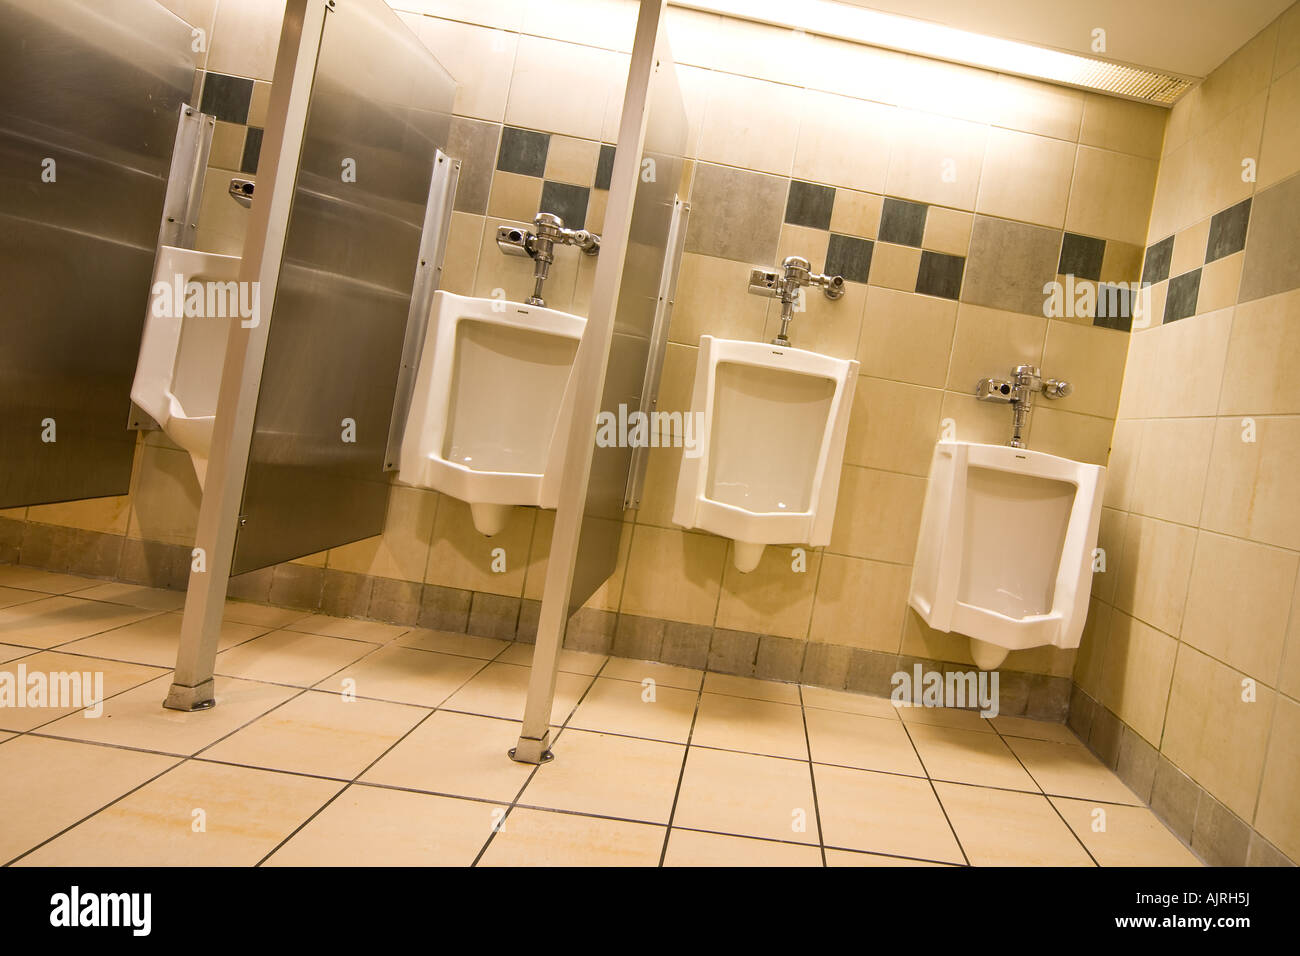 https://c8.alamy.com/comp/AJRH5J/public-toilet-typical-american-mens-room-urinals-AJRH5J.jpg